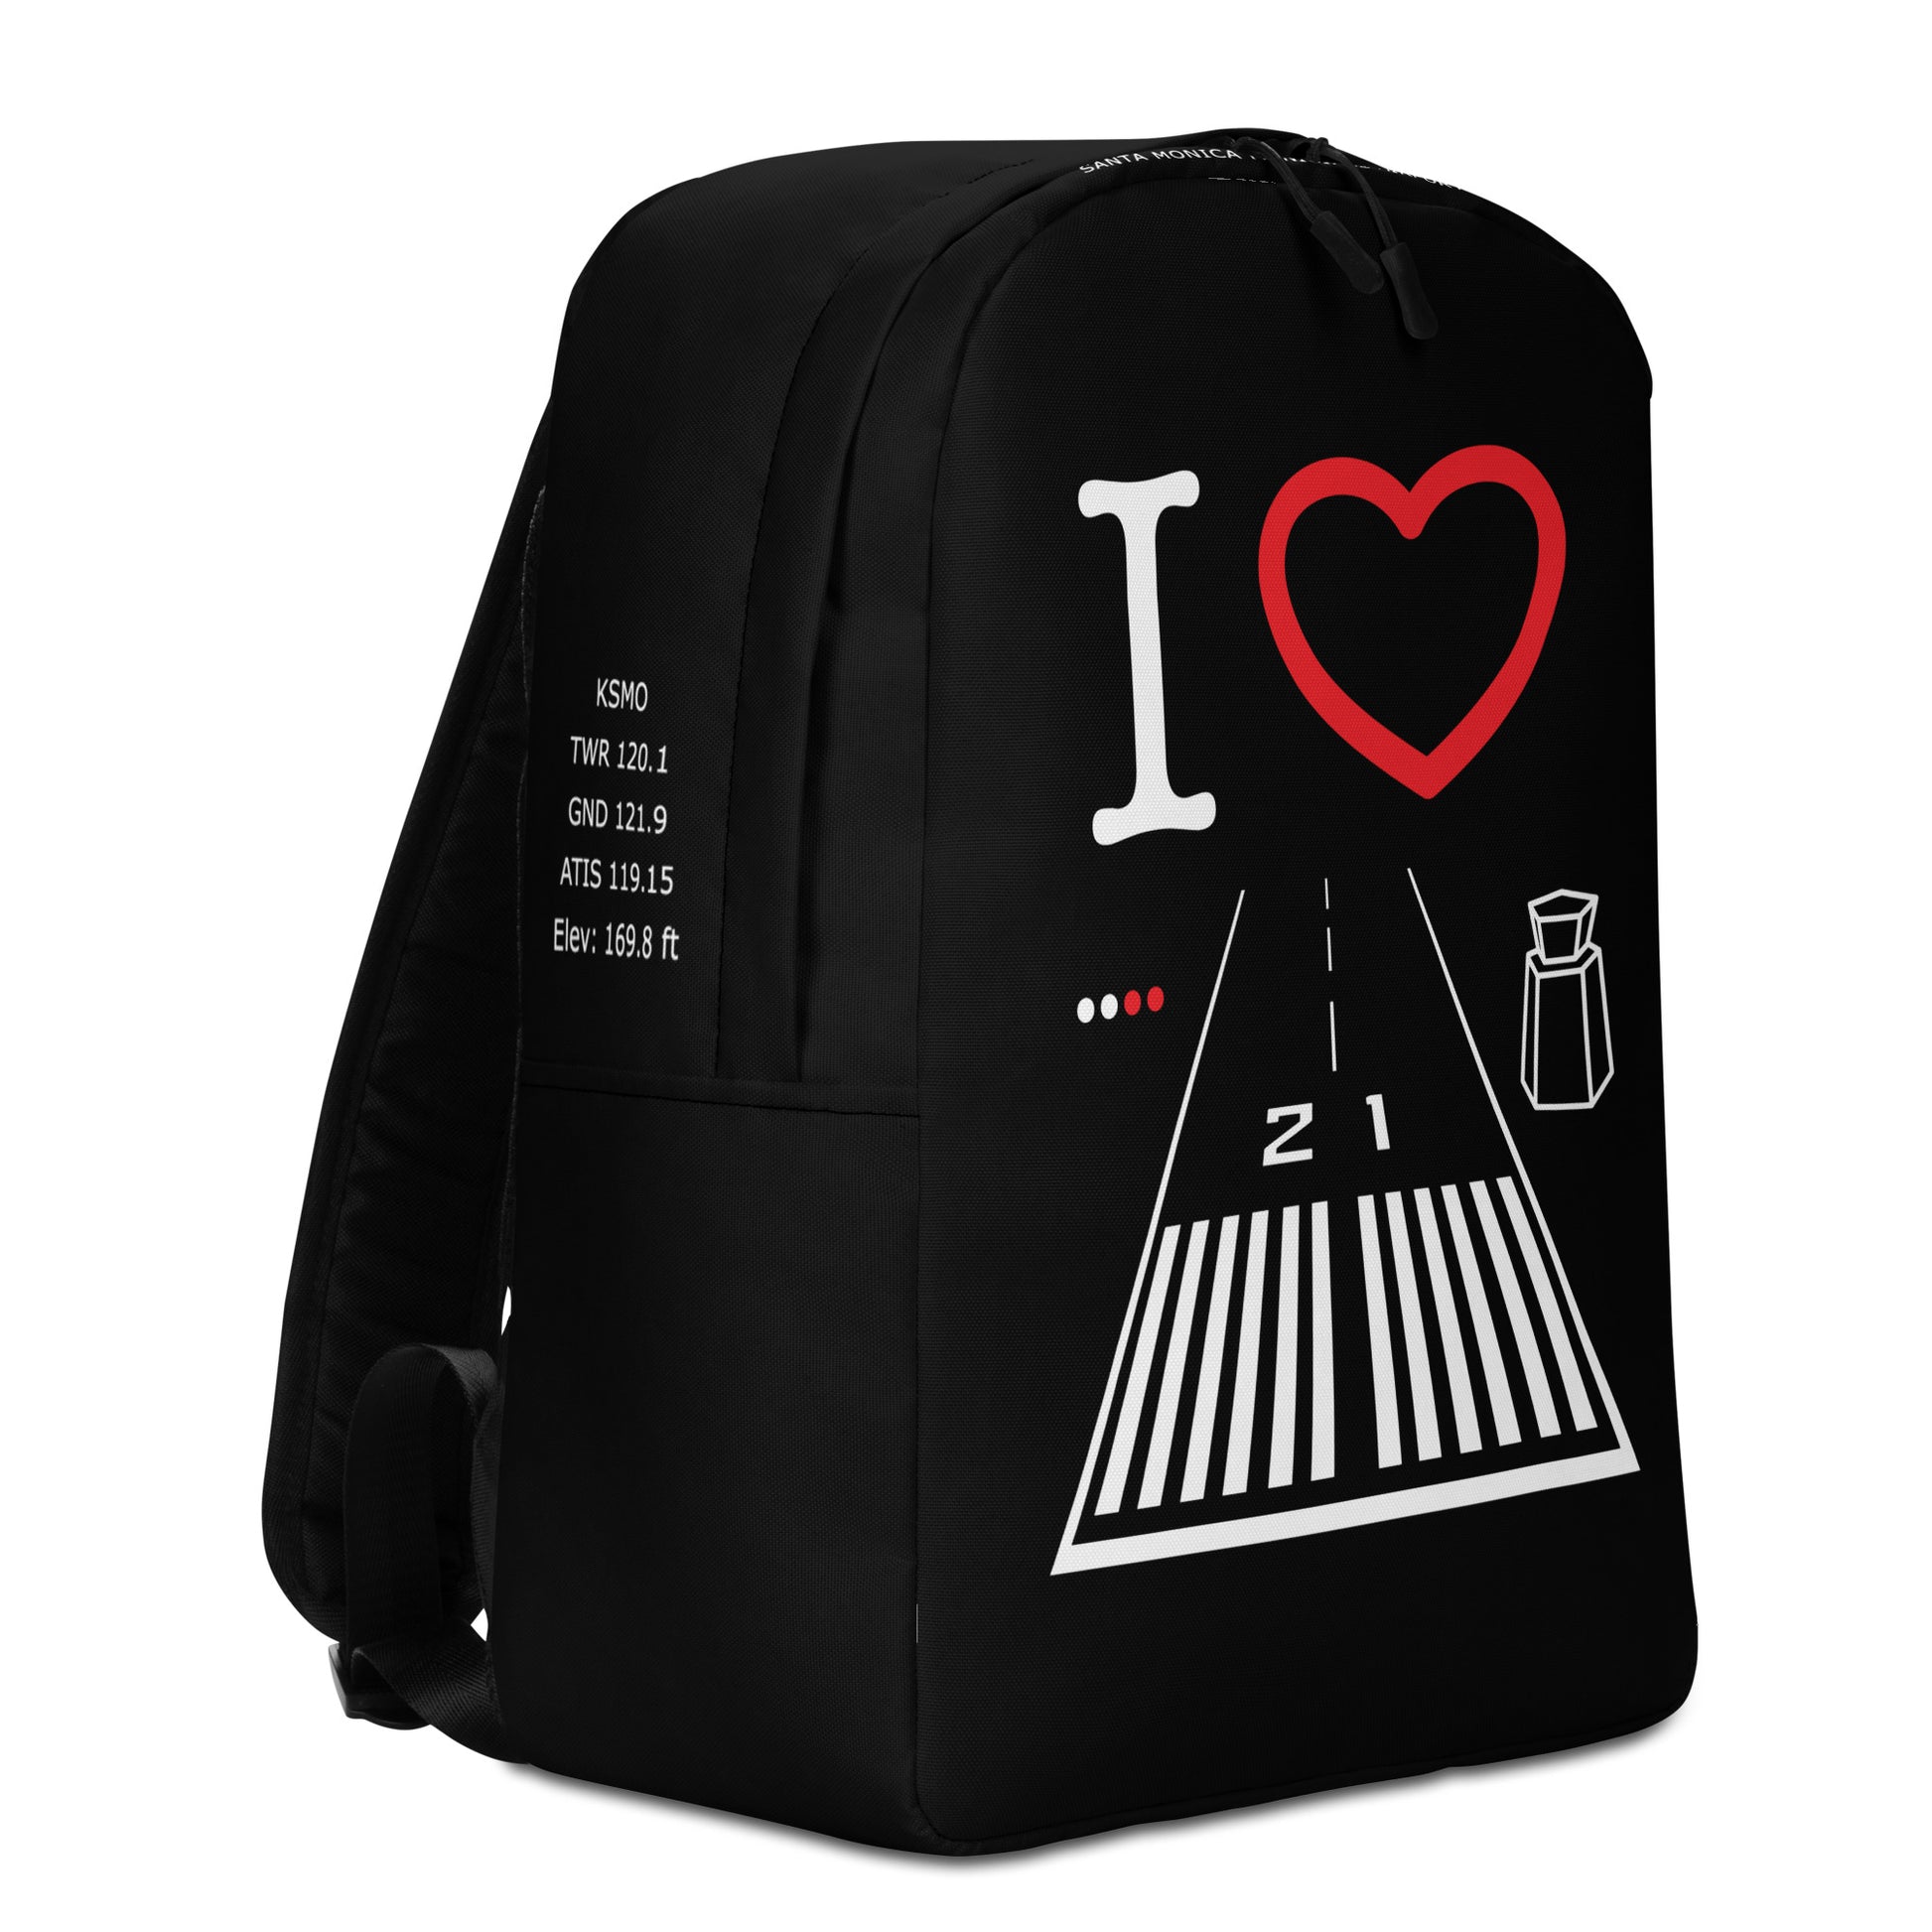 Santa Monica Airport Runway 21 - black minimalist backpack